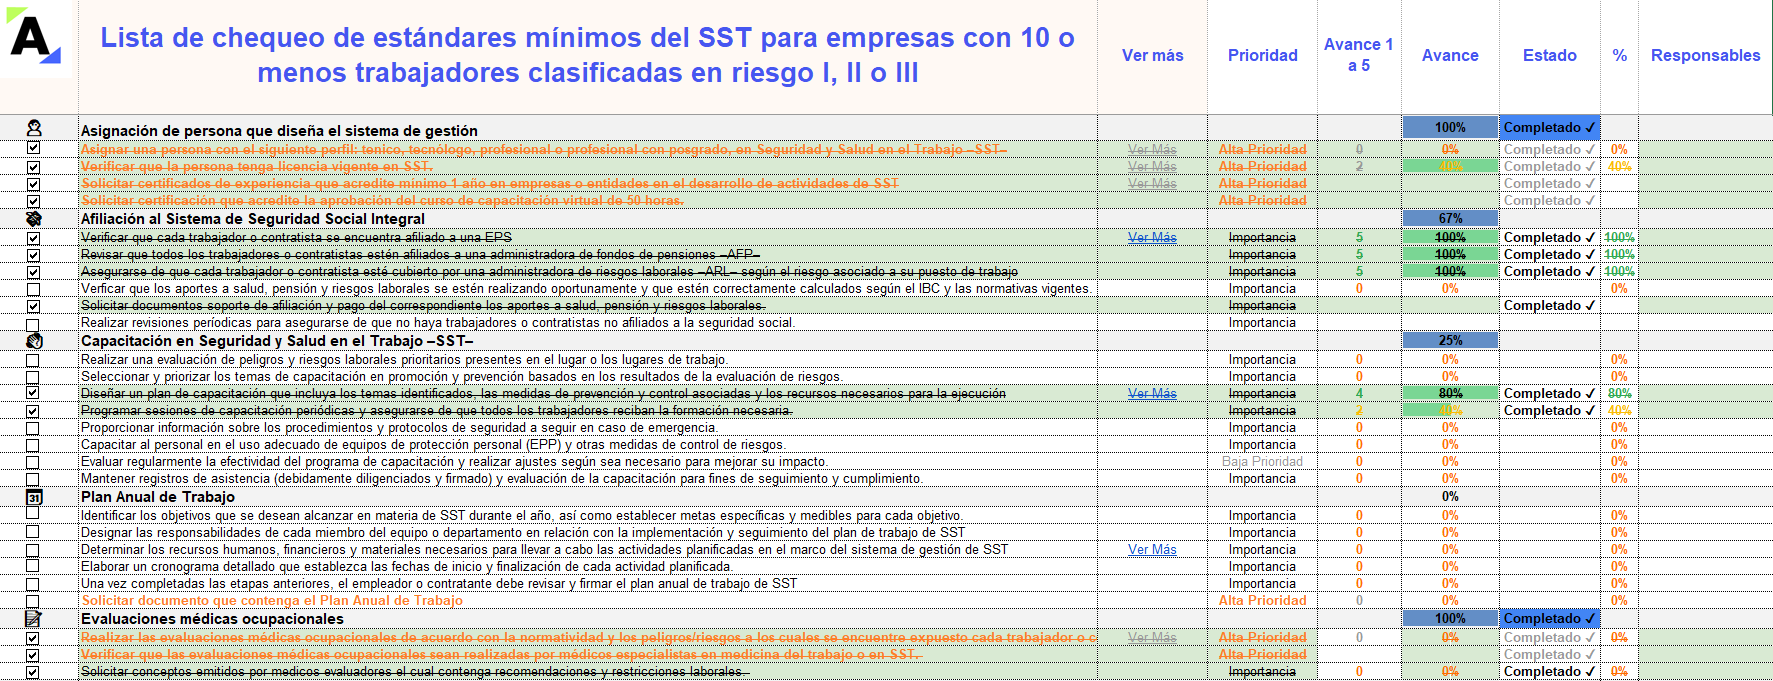 Lista de chequeo de estándares mínimos de SST para empresas con 10 o menos trabajadores